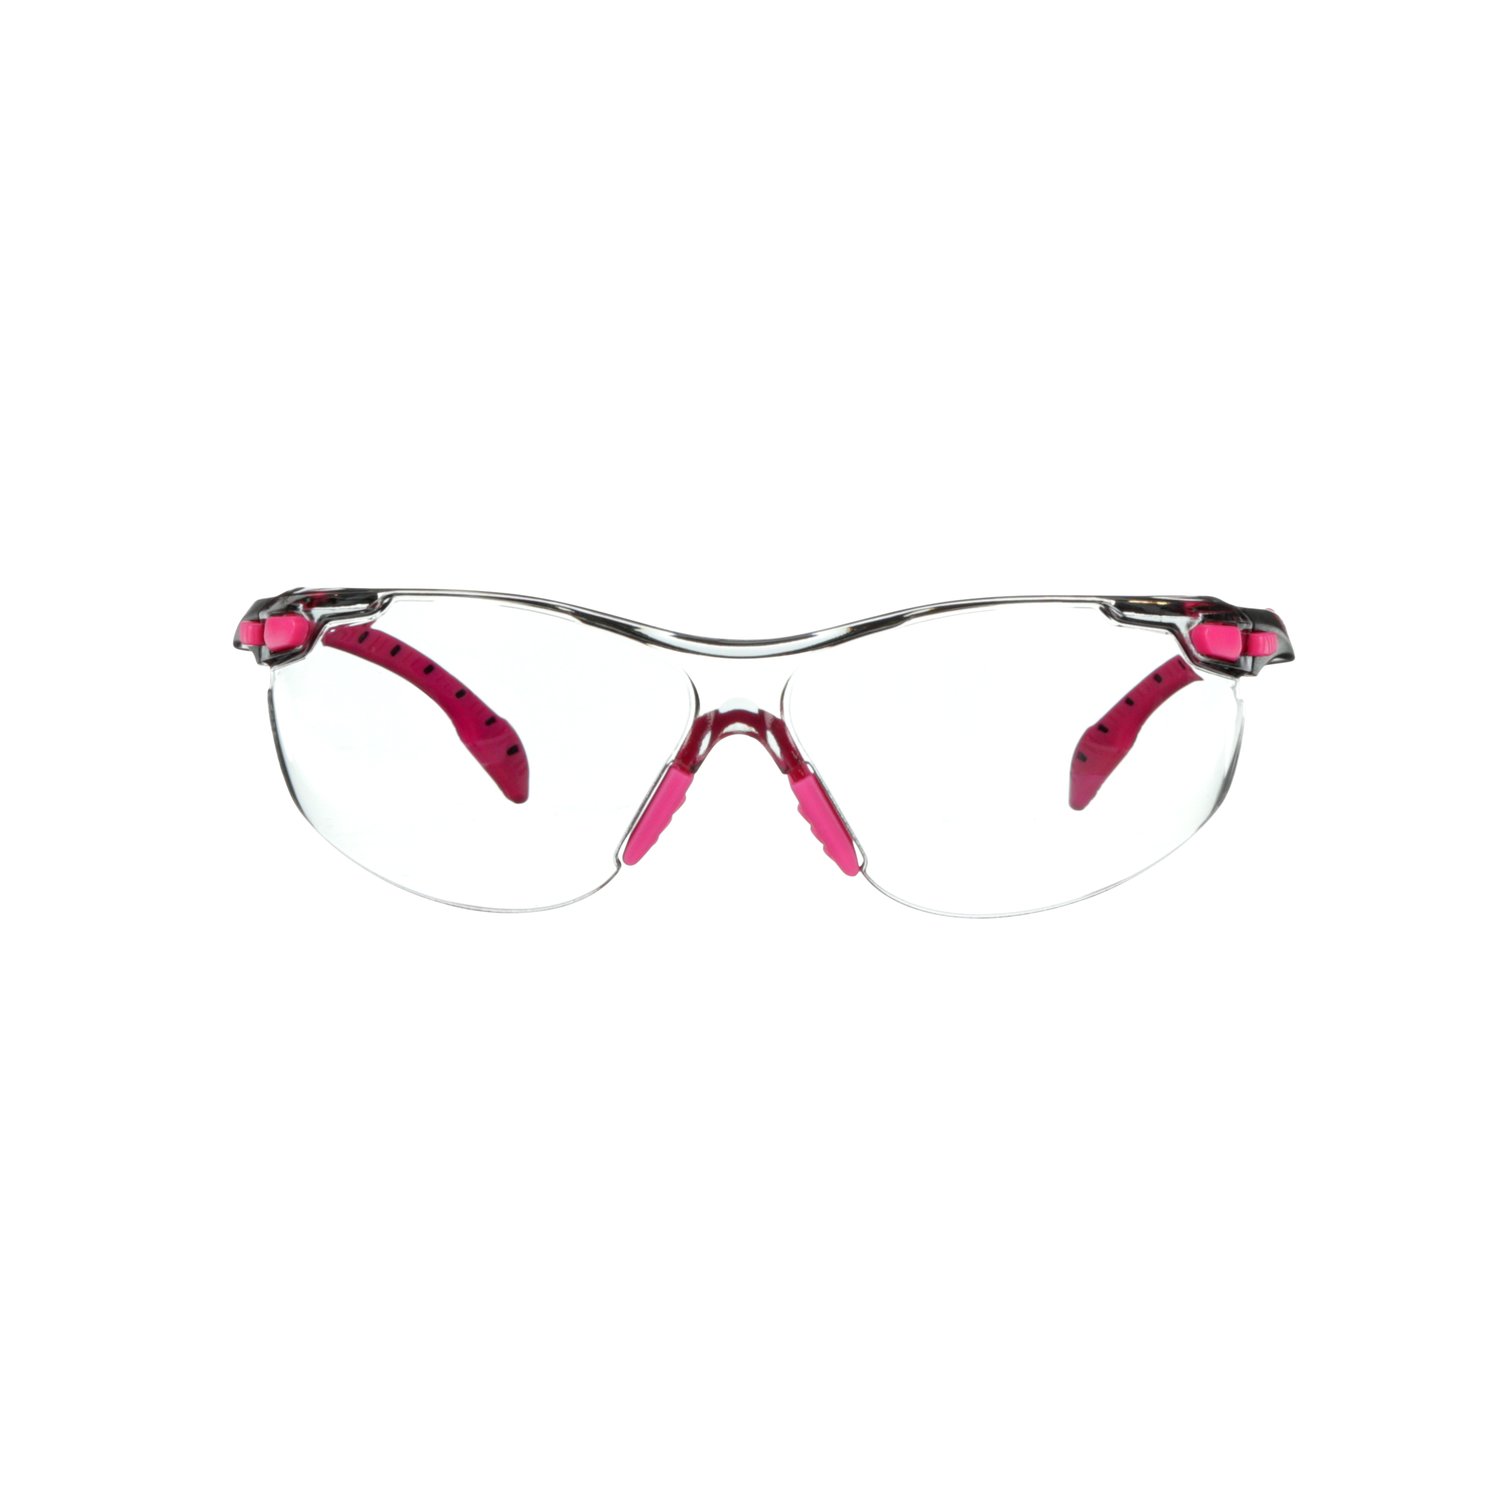 7100181053 - 3M Solus 1000-Series Safety Glasses S1401SGAF, Pink/Black, Clear
Scotchgard Anti-fog Lens, 20 EA/Case